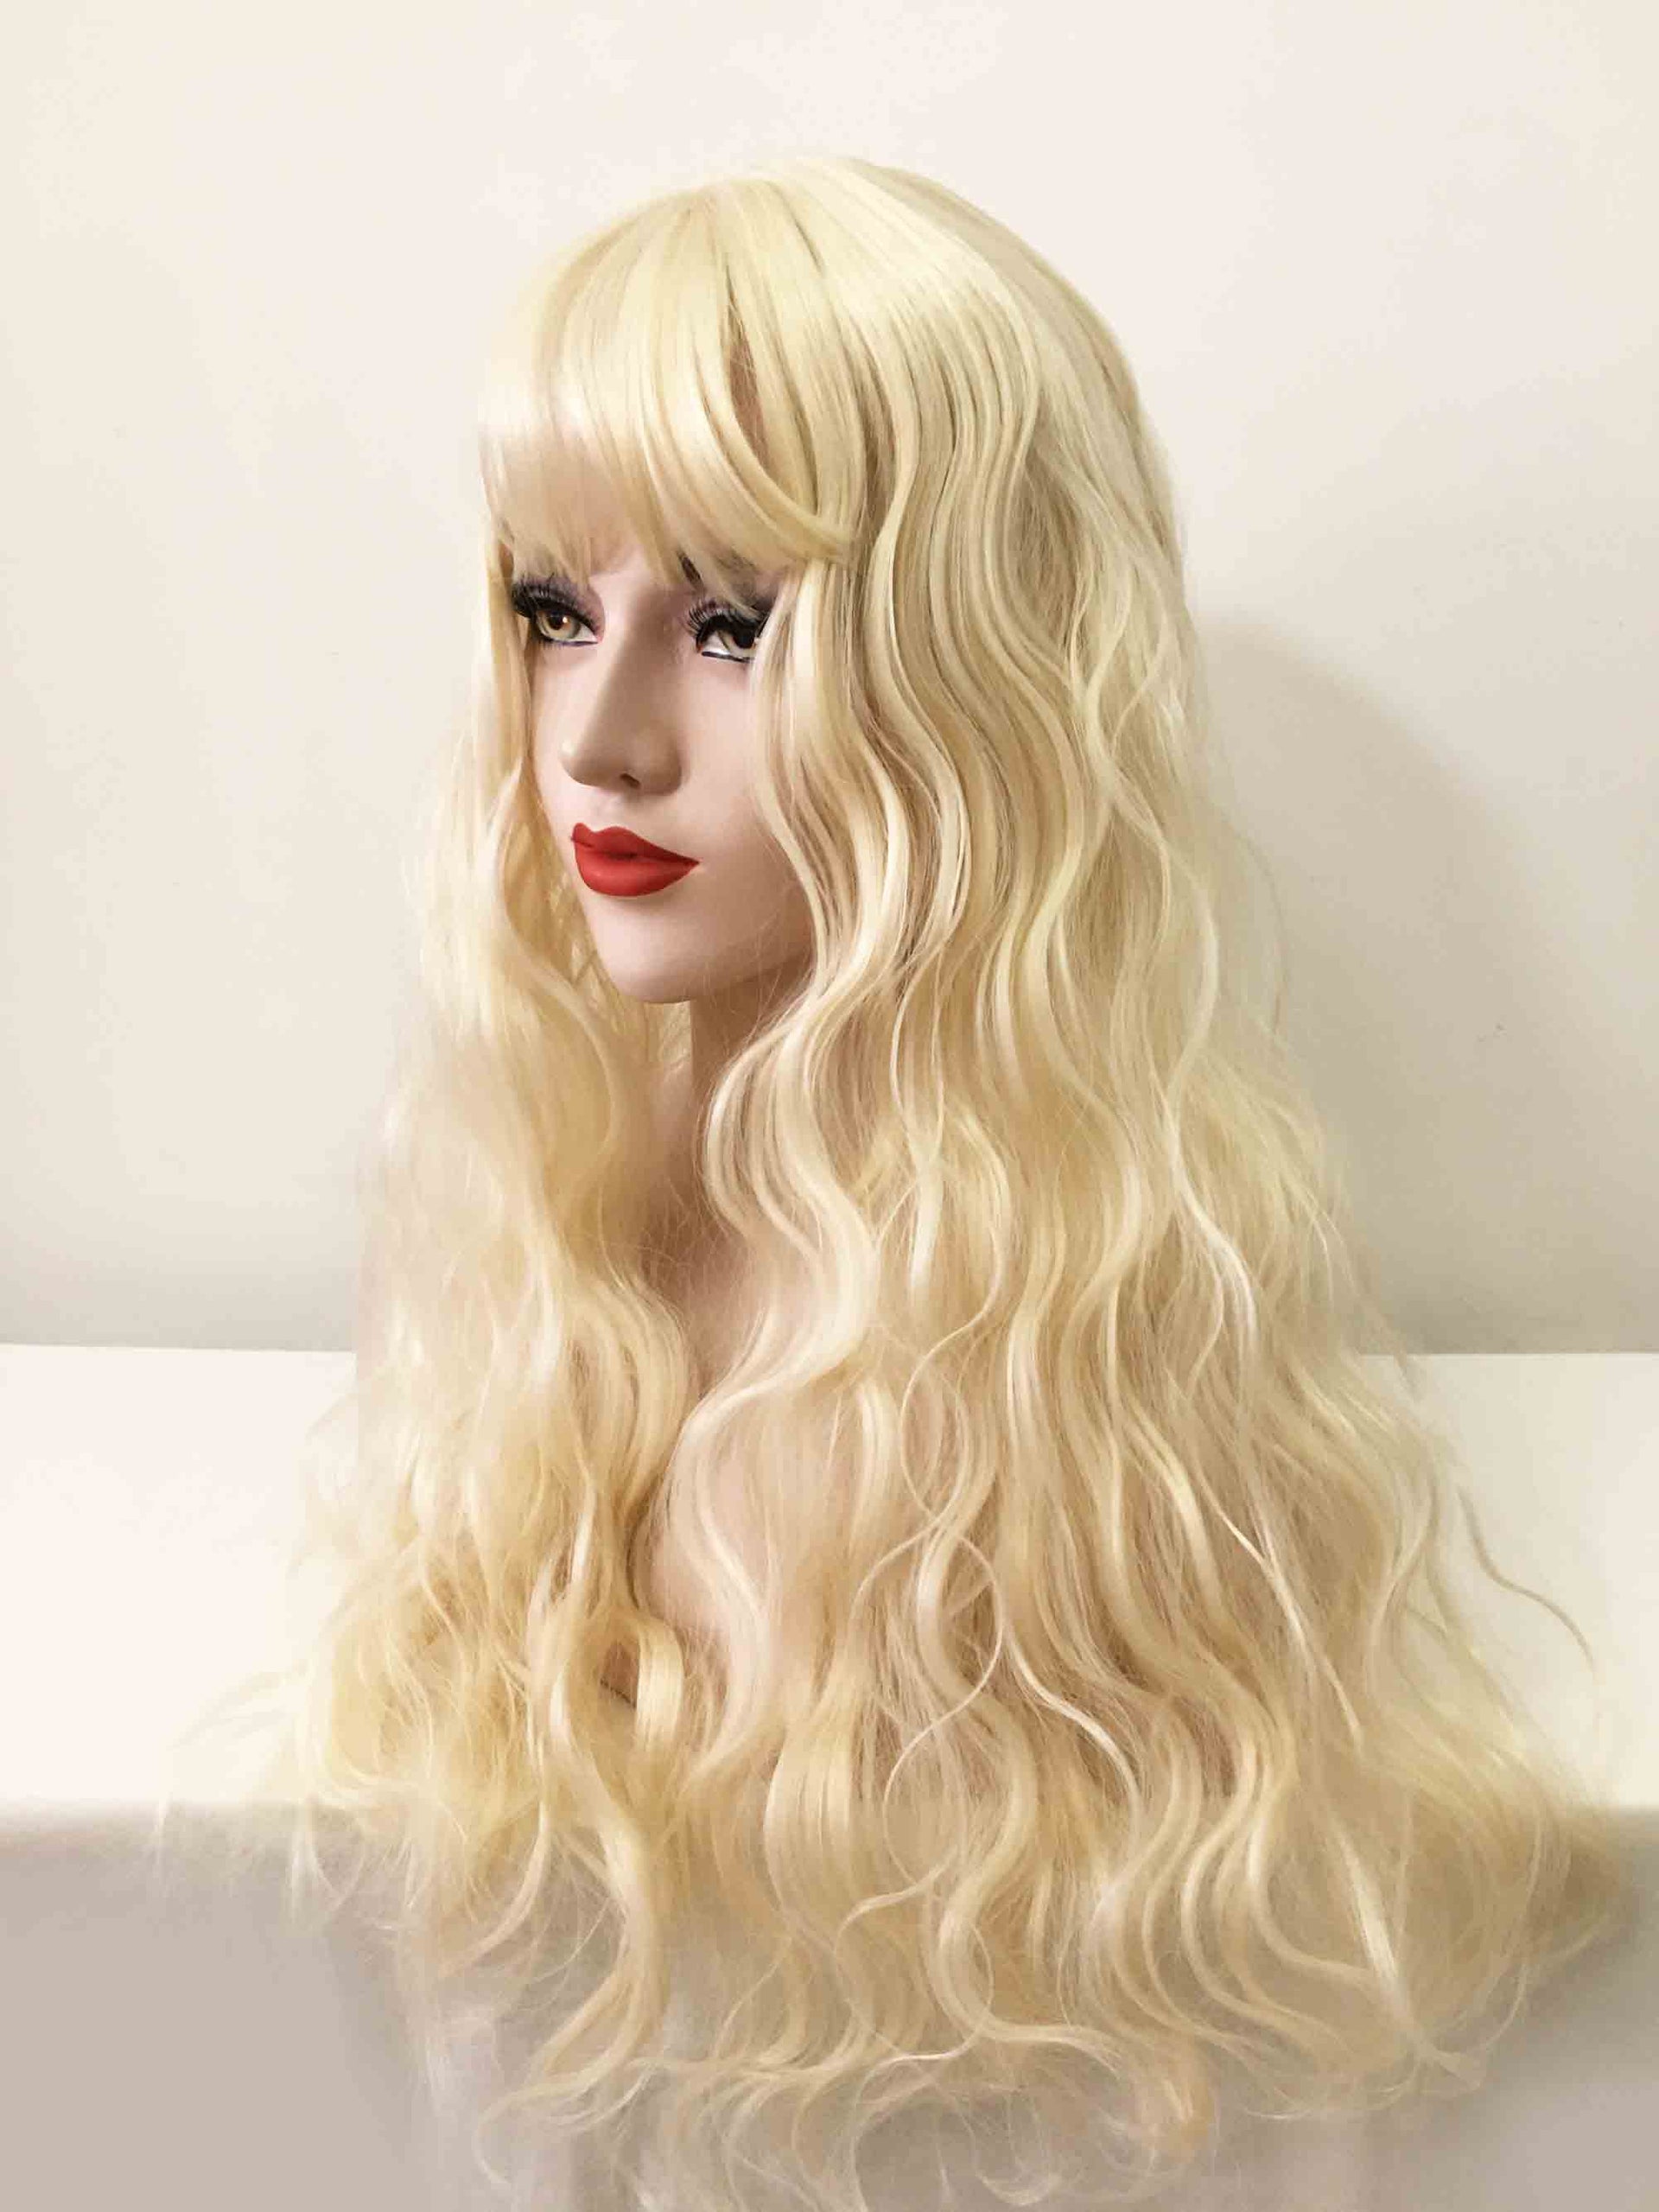 nevermindyrhead Women Blonde Long Curly Fringe Bangs Wig